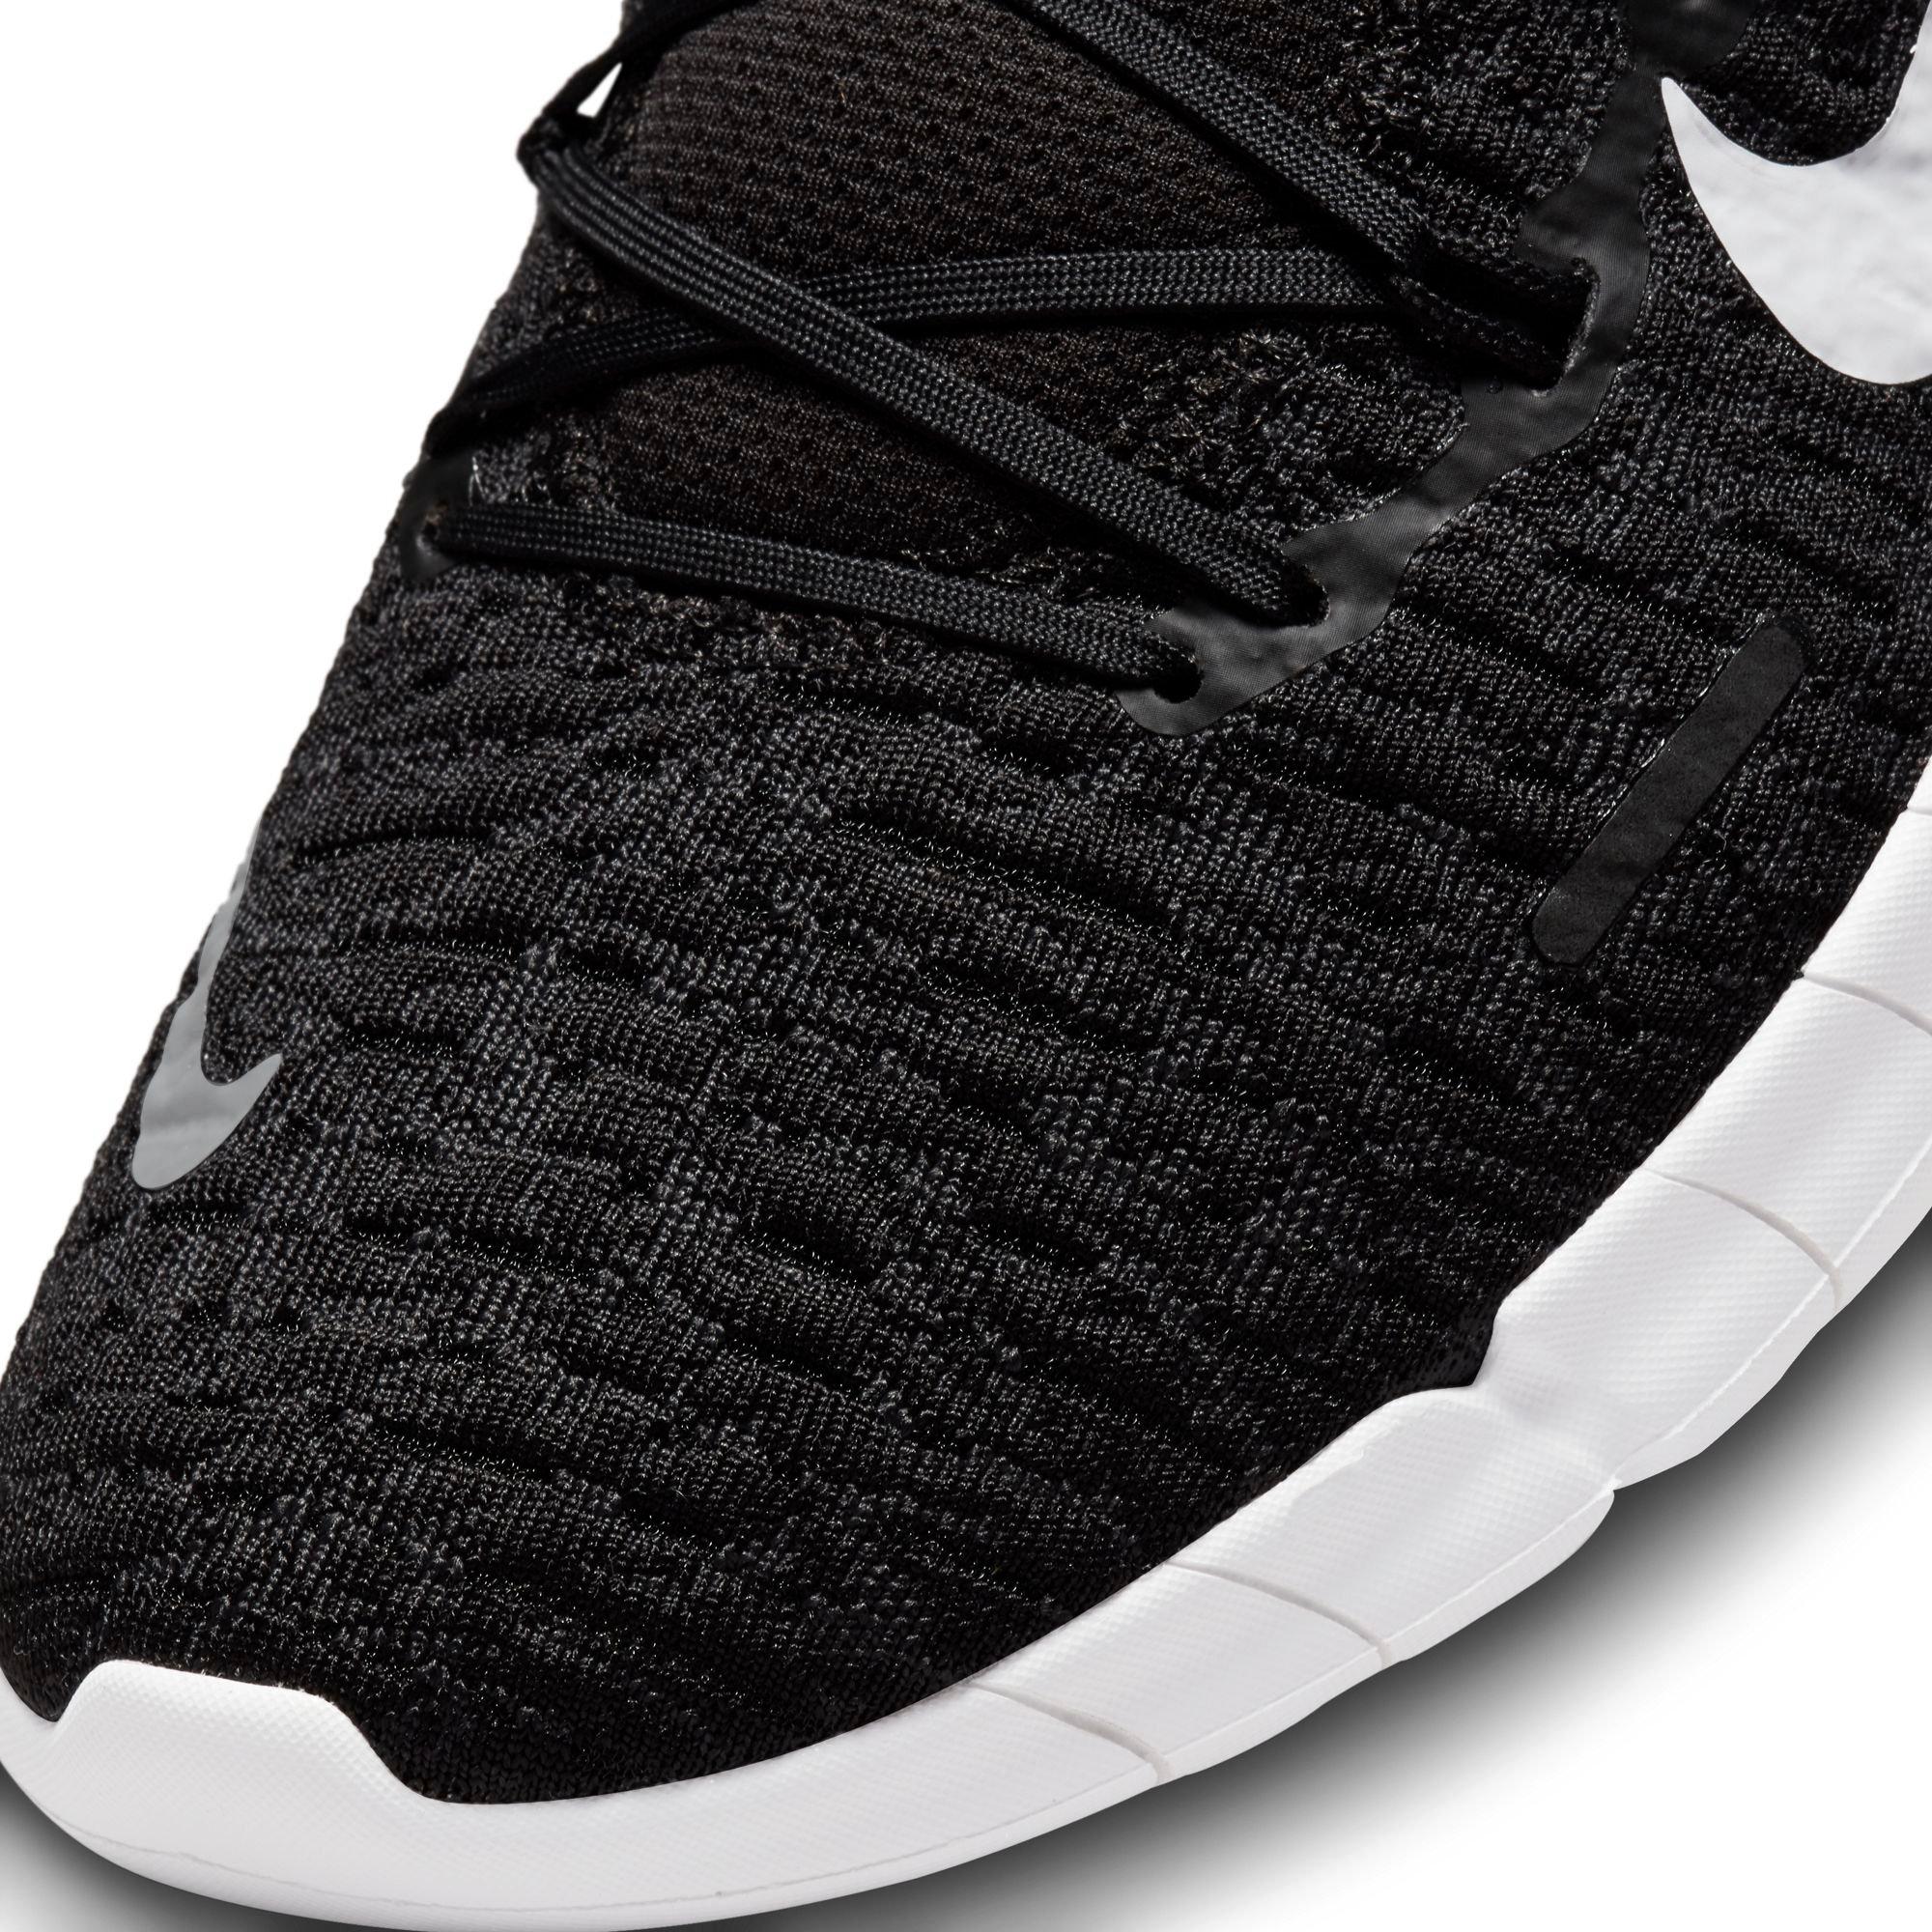 Nike Free Run 5.0 "Black/White/Smoke Grey" Men's Shoe